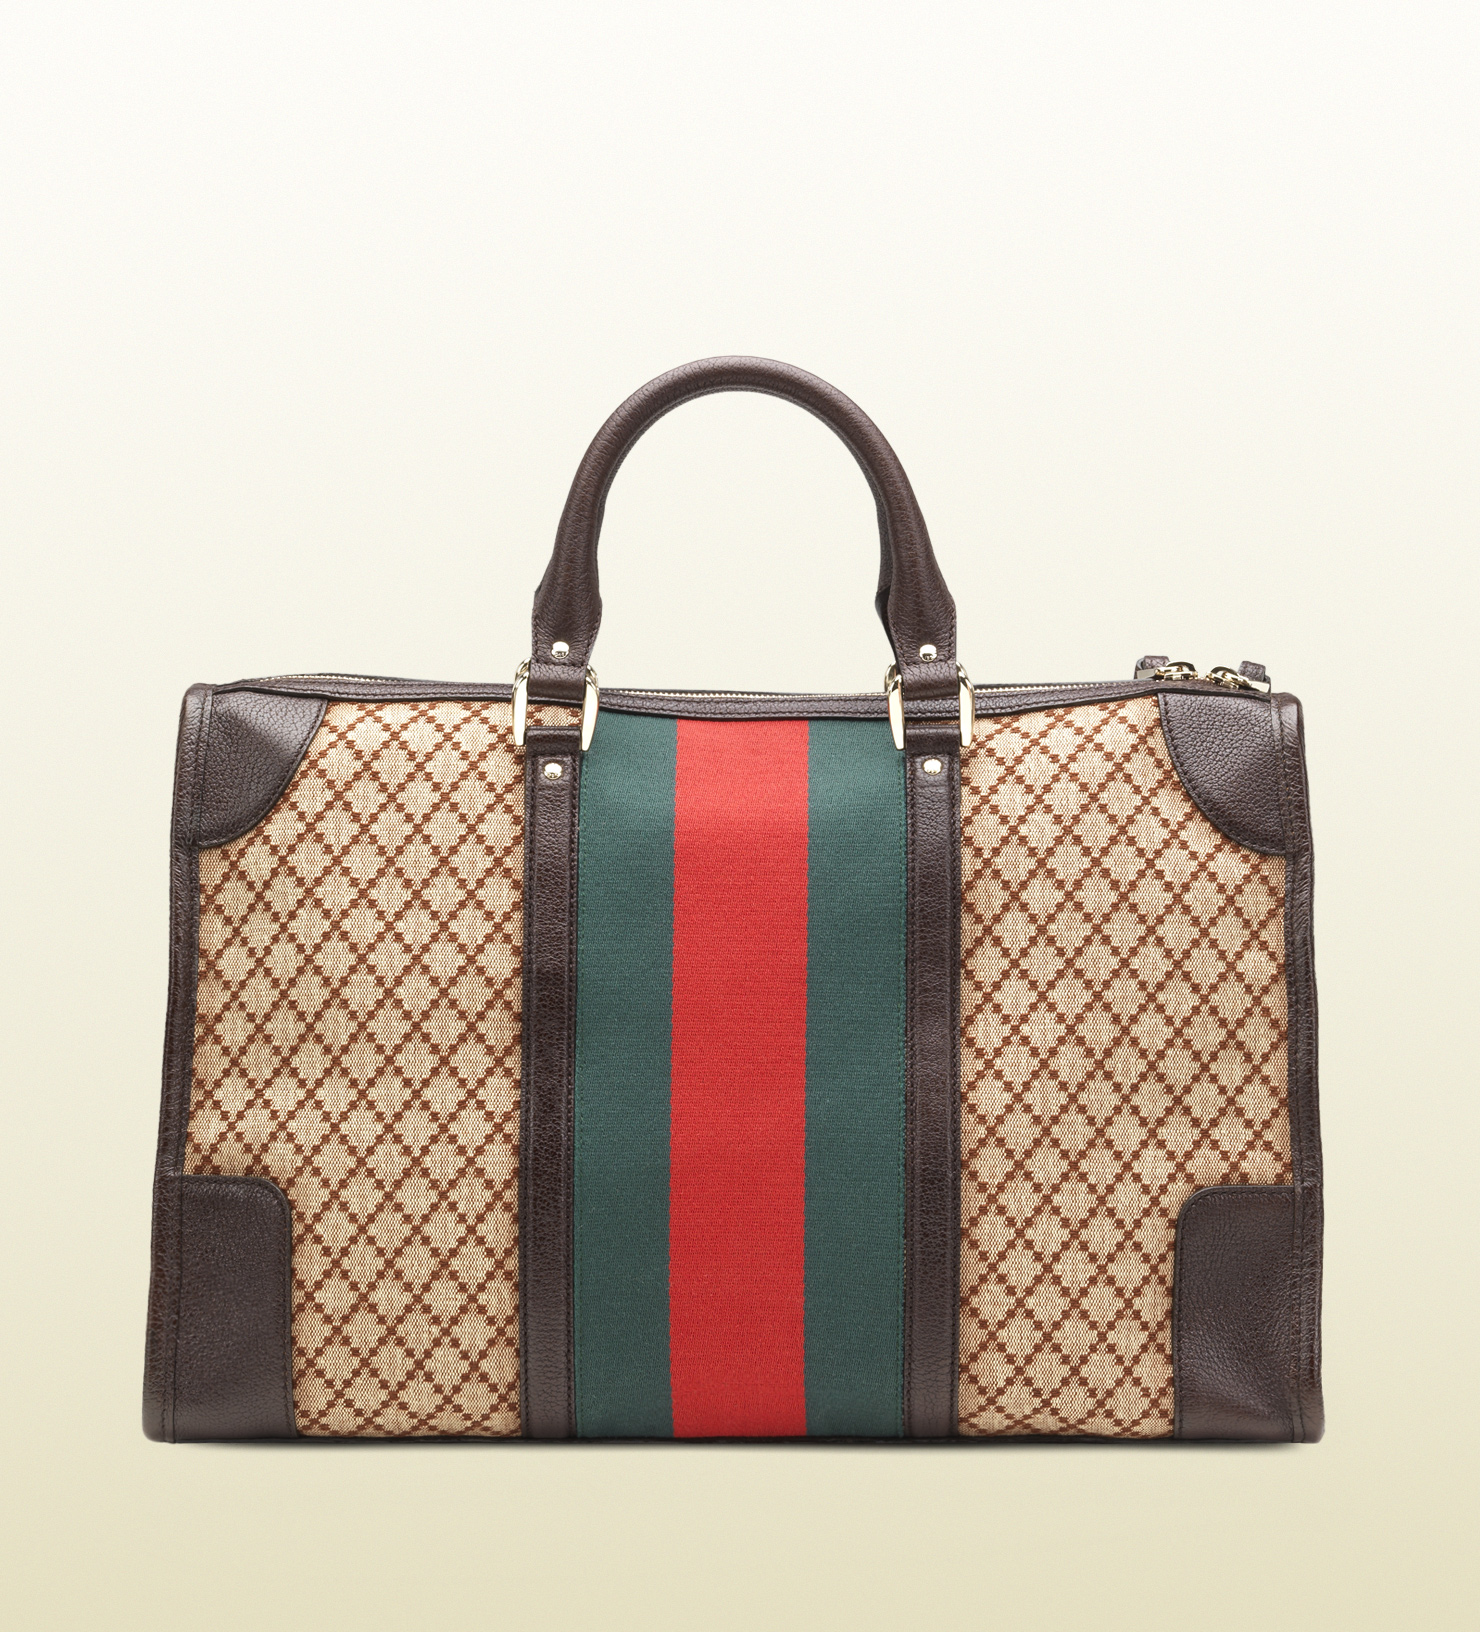 Lyst - Gucci Signature Web Diamante Canvas Duffel Bag in Brown for Men